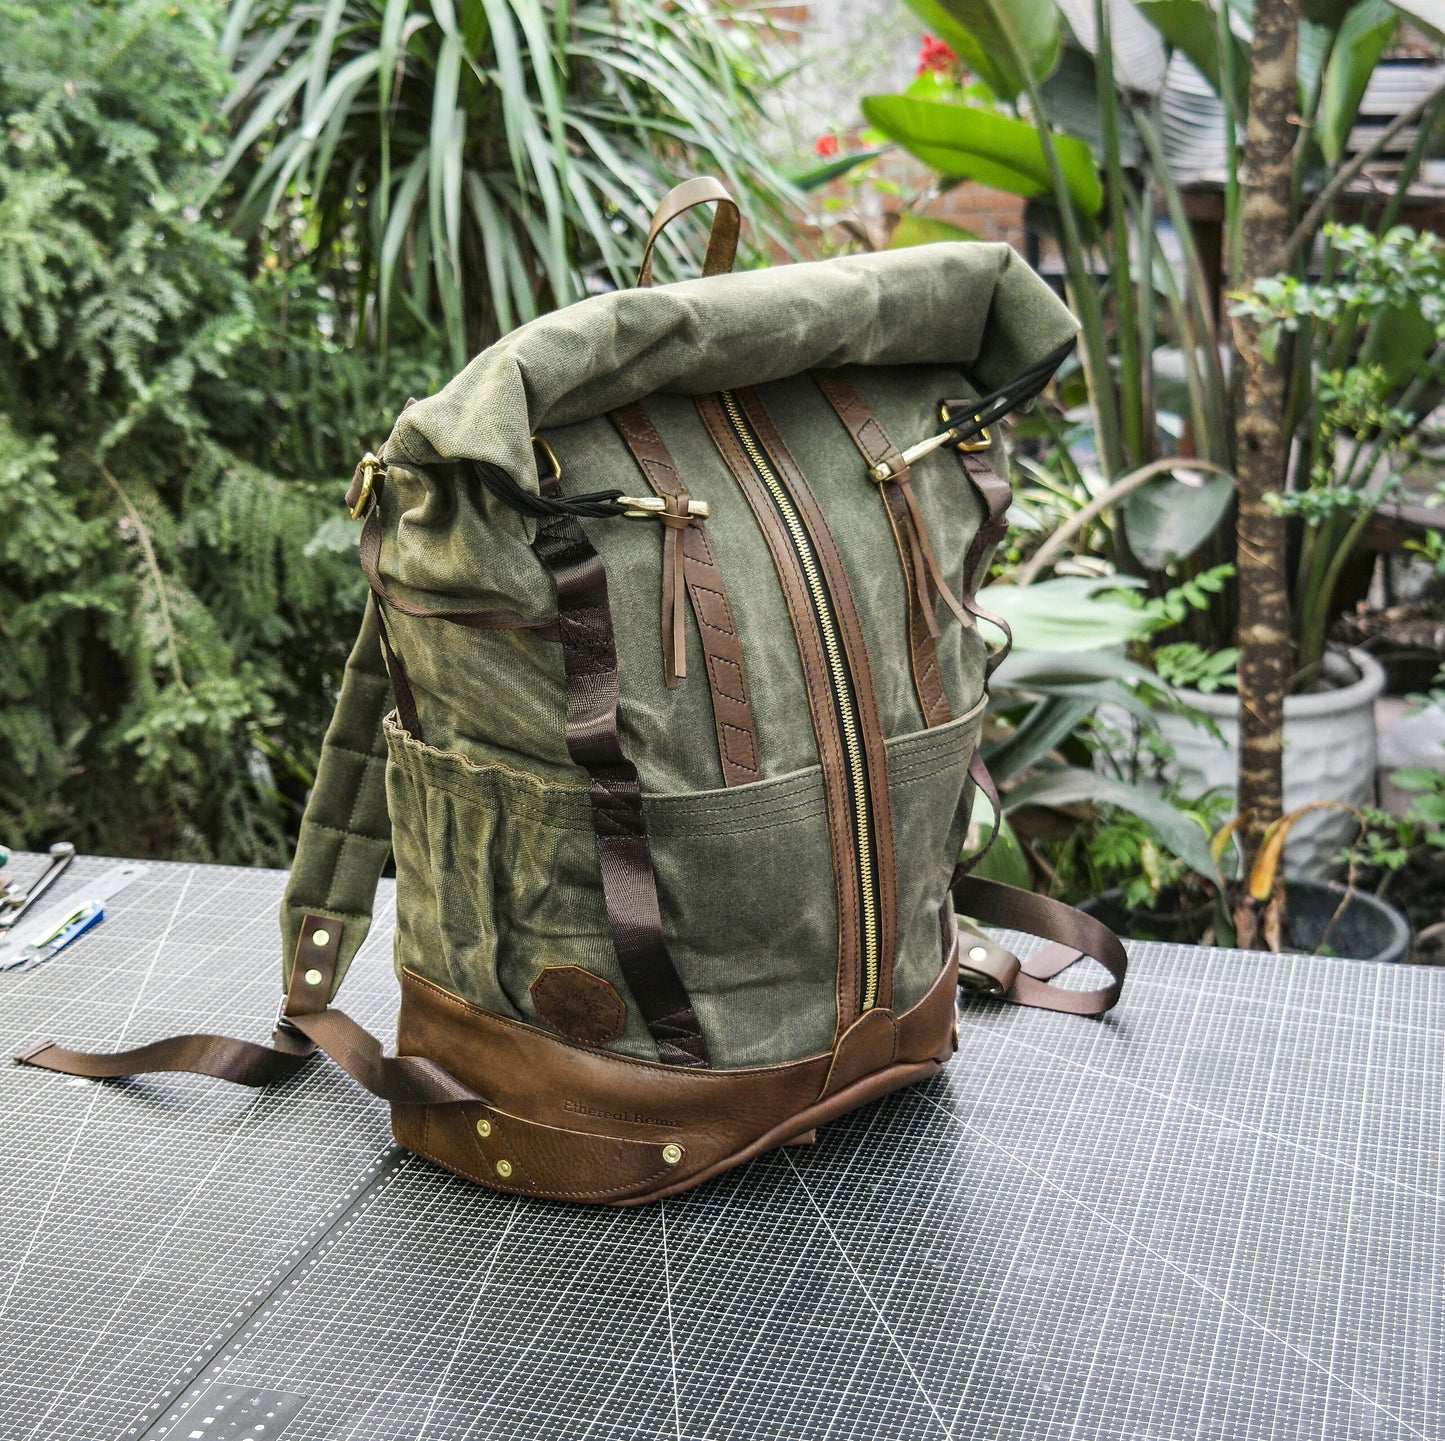 Canvas Backpacks &amp; Rucksacks - Vintage Backpacks&nbsp;| Leather Backpack | Waxed Canvas Backpack | Bushcraft Backpack | Travel, Camping, Hiking | Riding backpack, motorcycle backpack